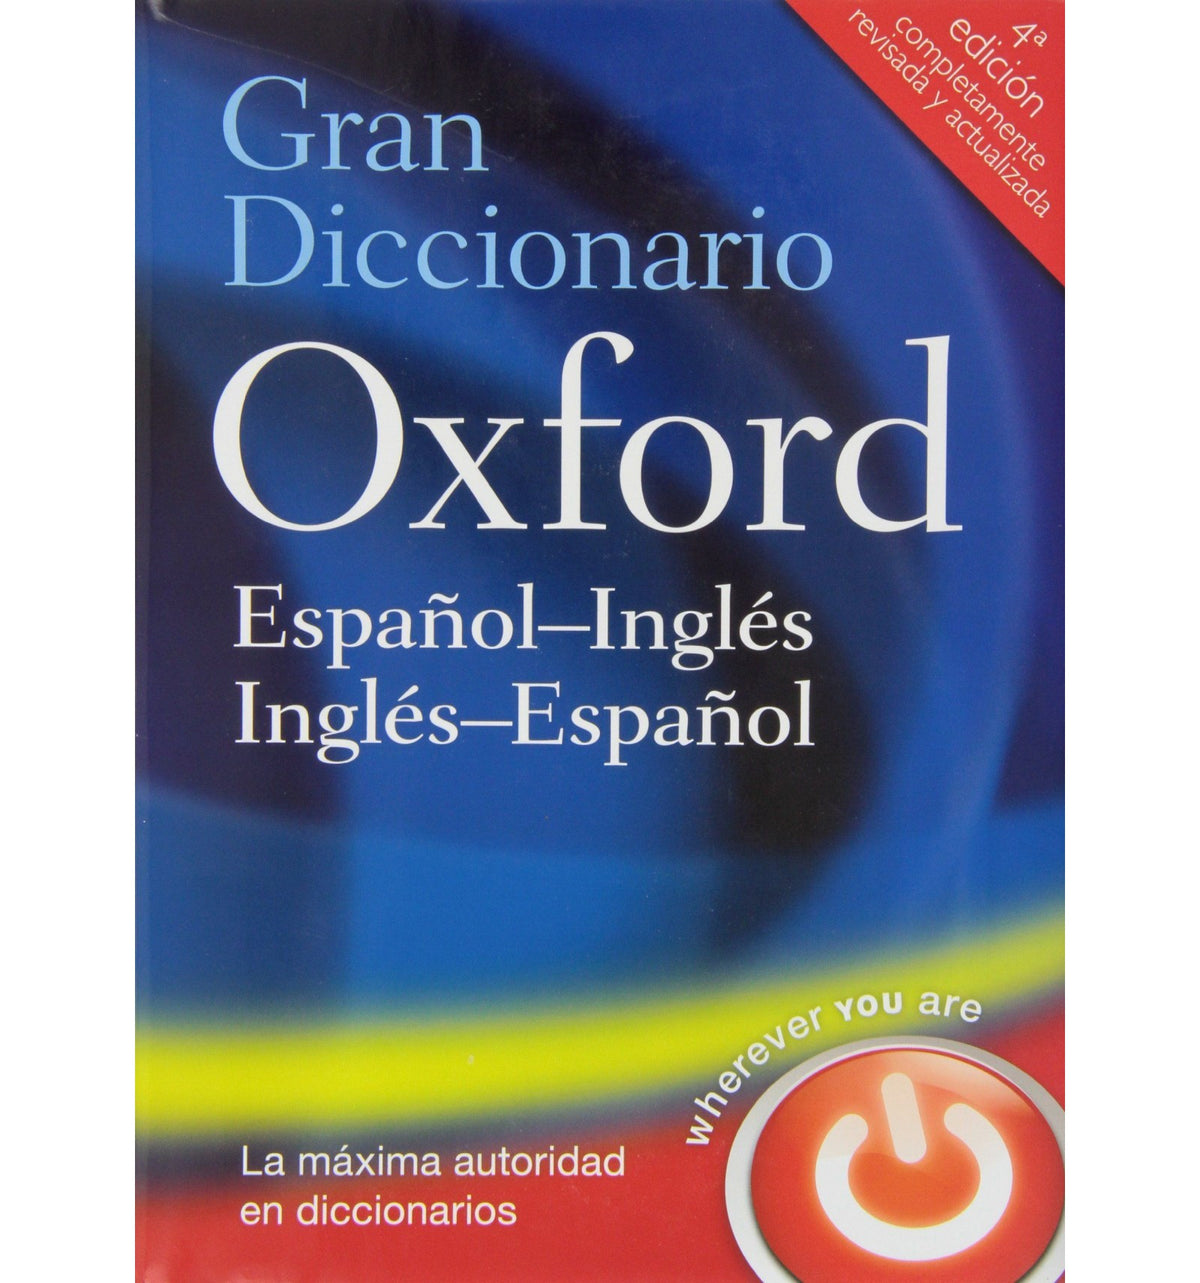 Gran Diccionario Oxford: Espanol-Ingles, Ingles-Espanol